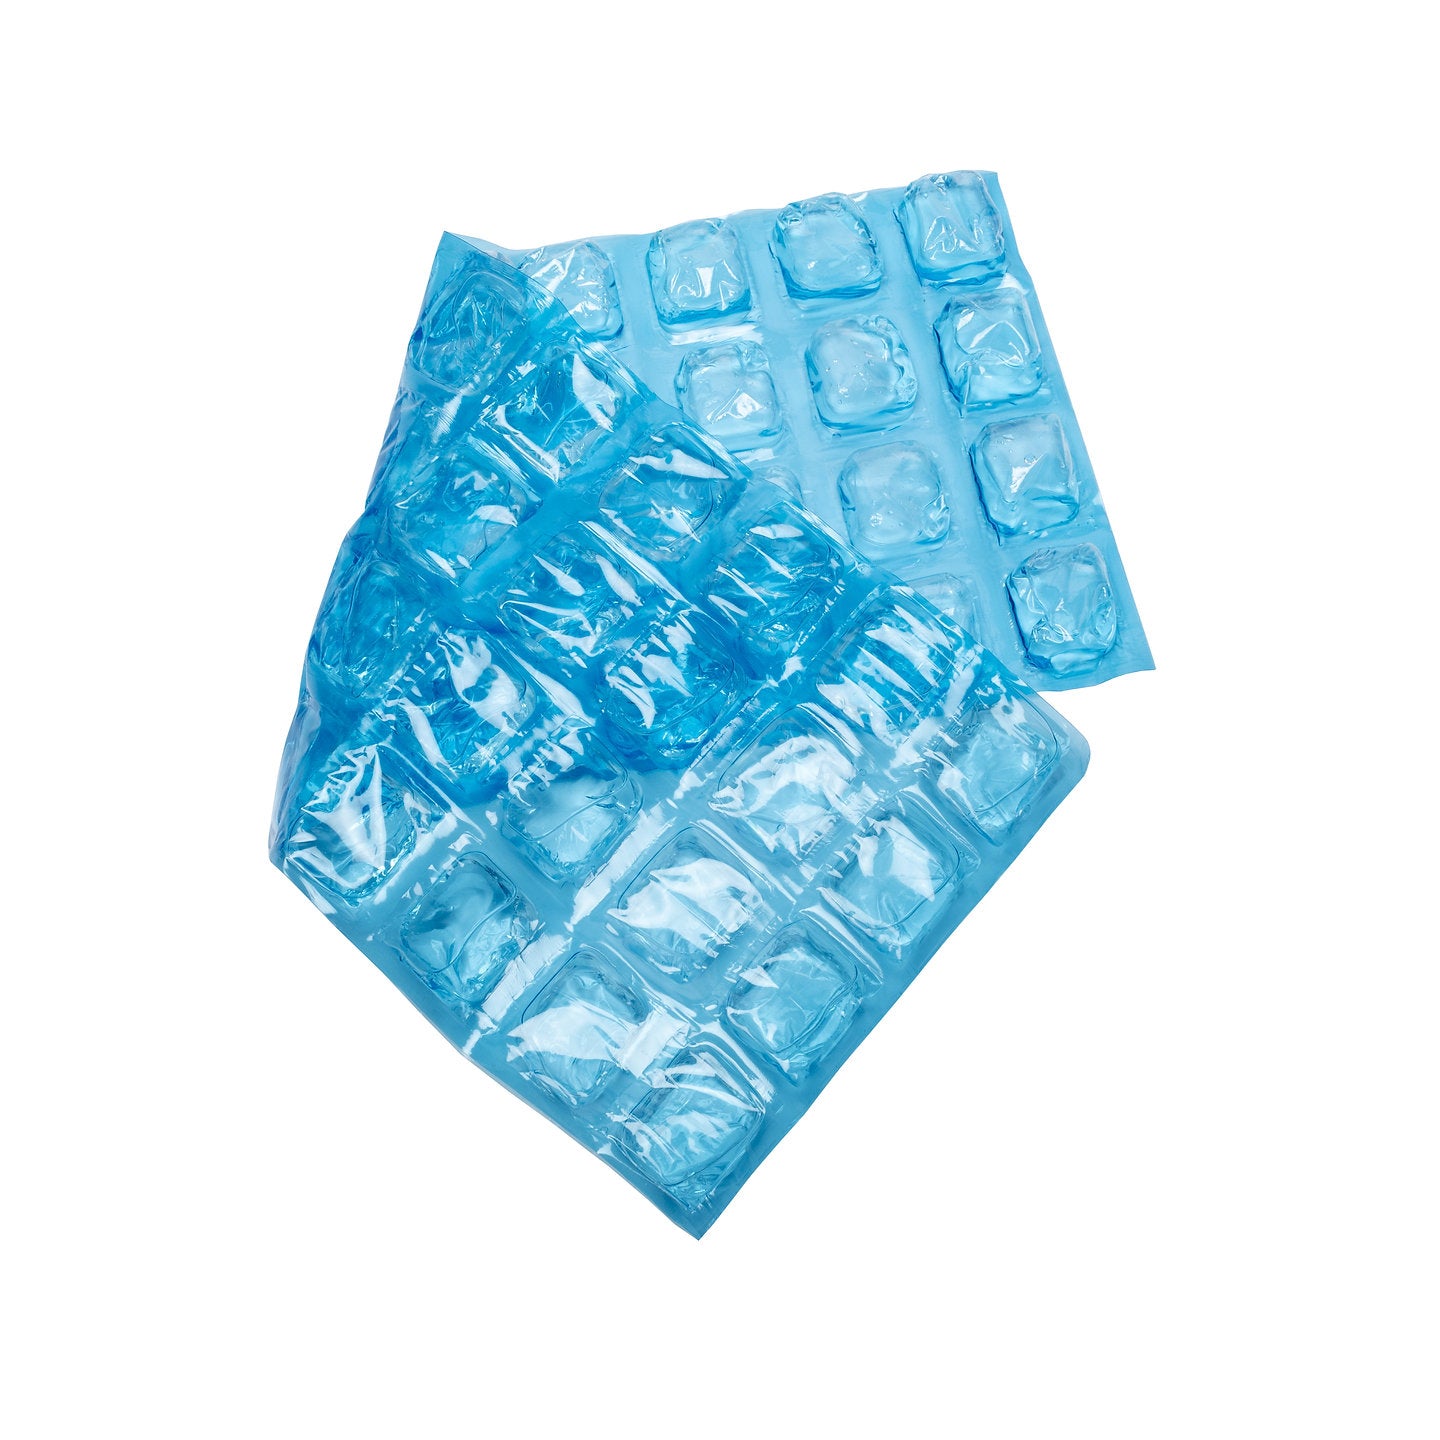 Geckobrands Ice Packs - Medium Pack - 2 lb